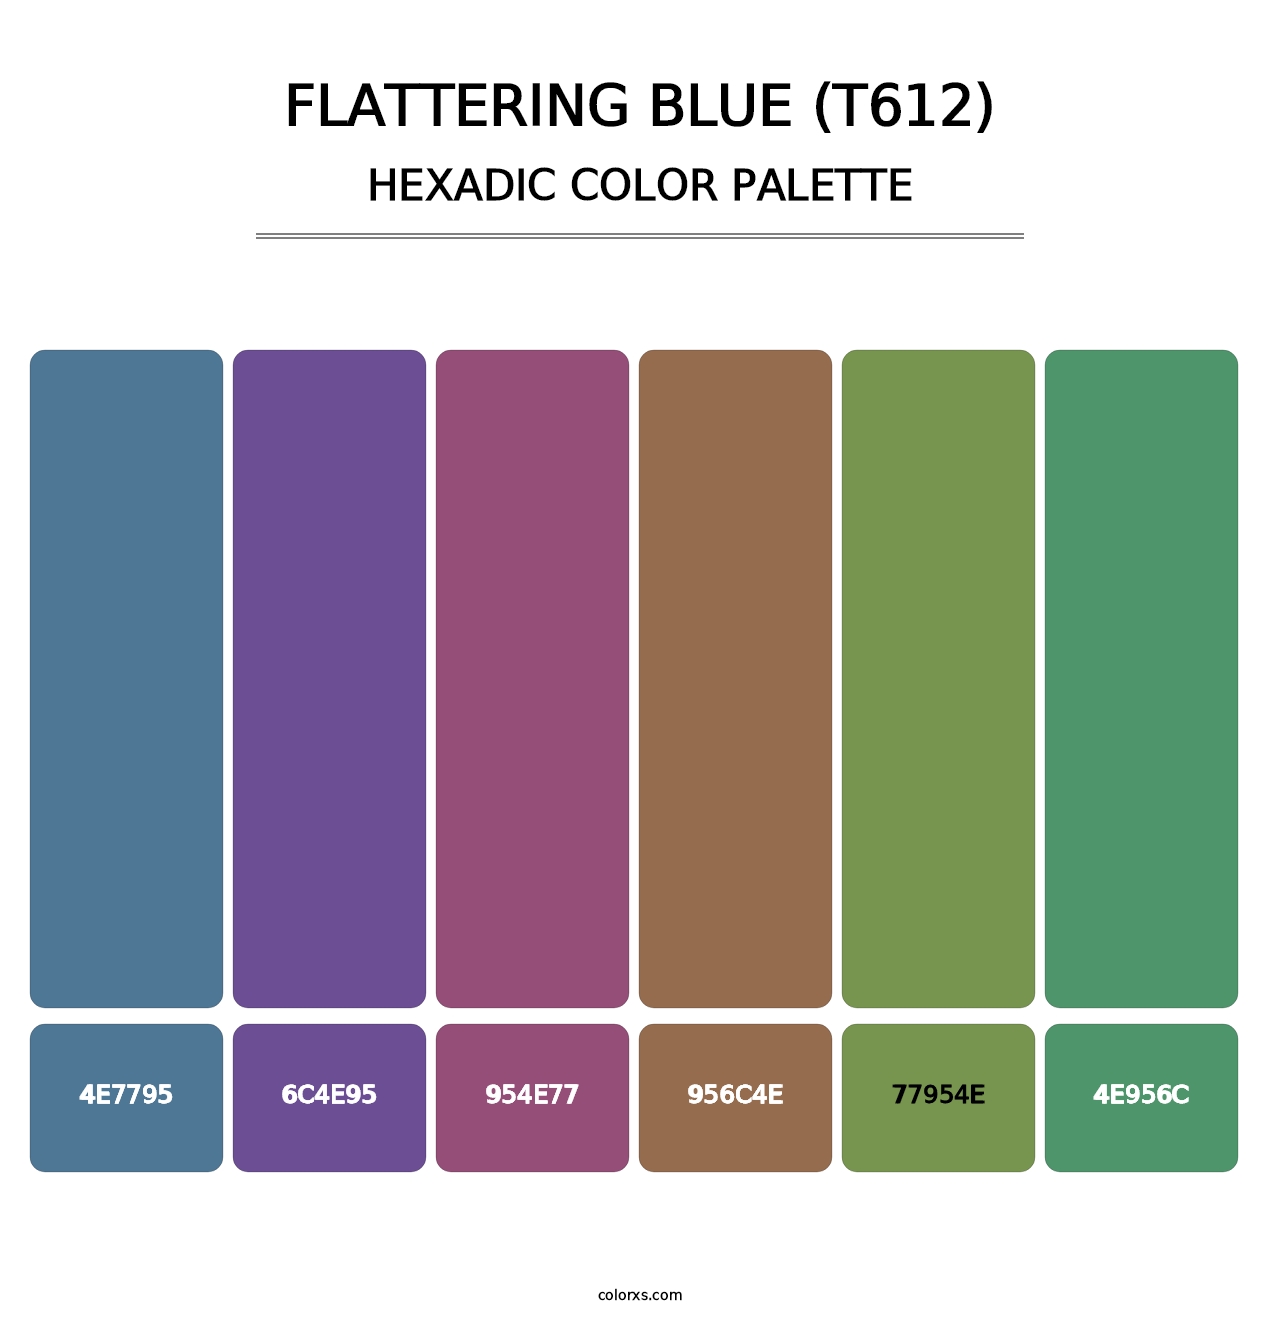 Flattering Blue (T612) - Hexadic Color Palette